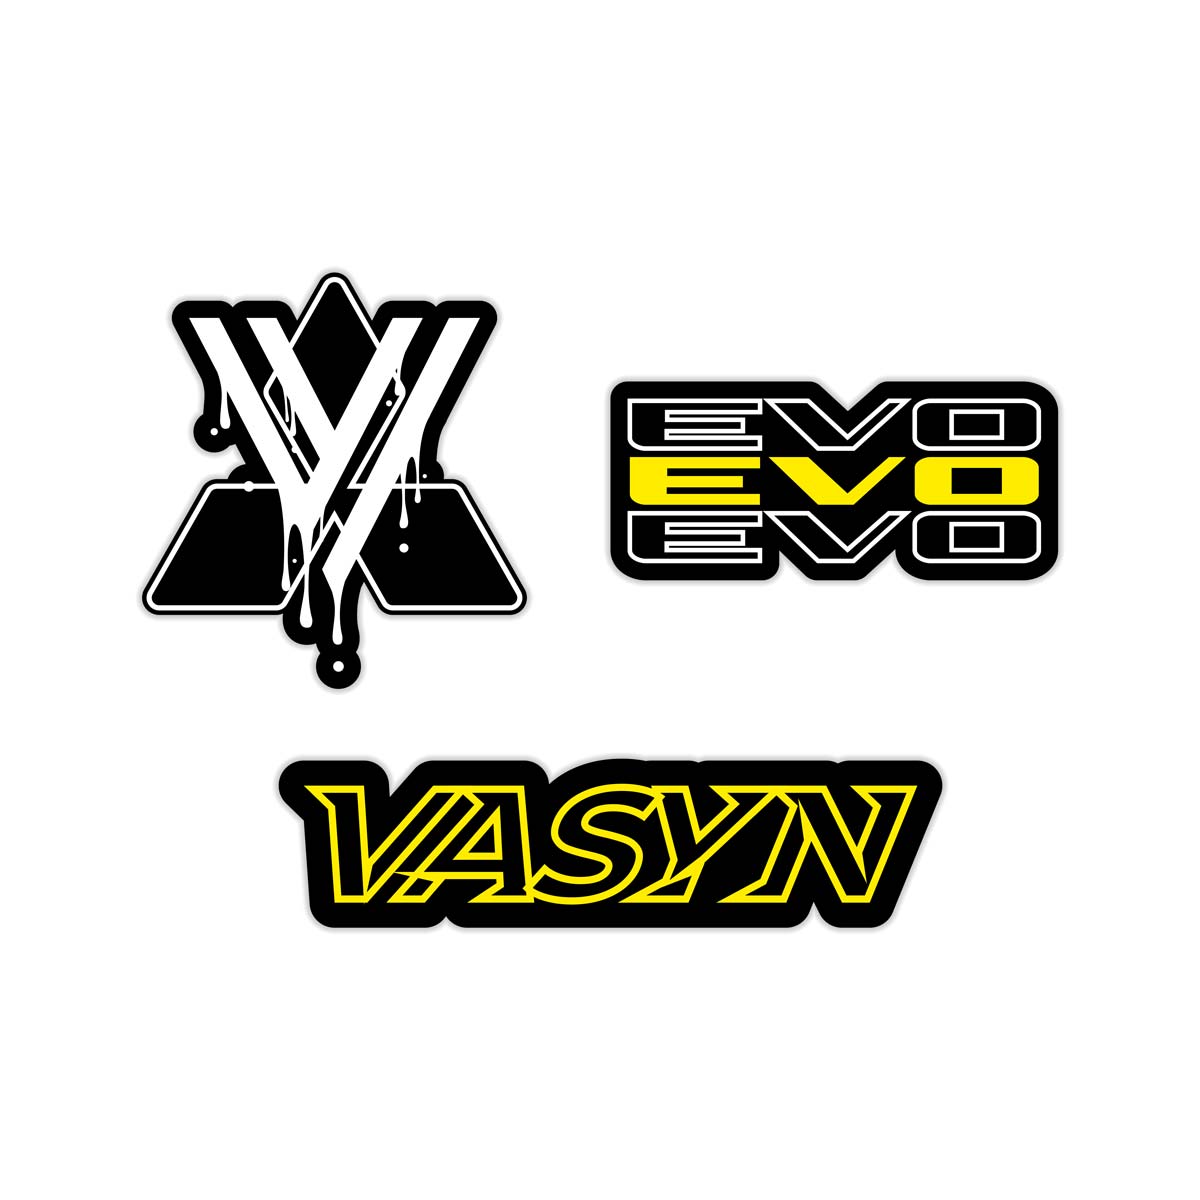 Vasyn x Evo Sticker Pack